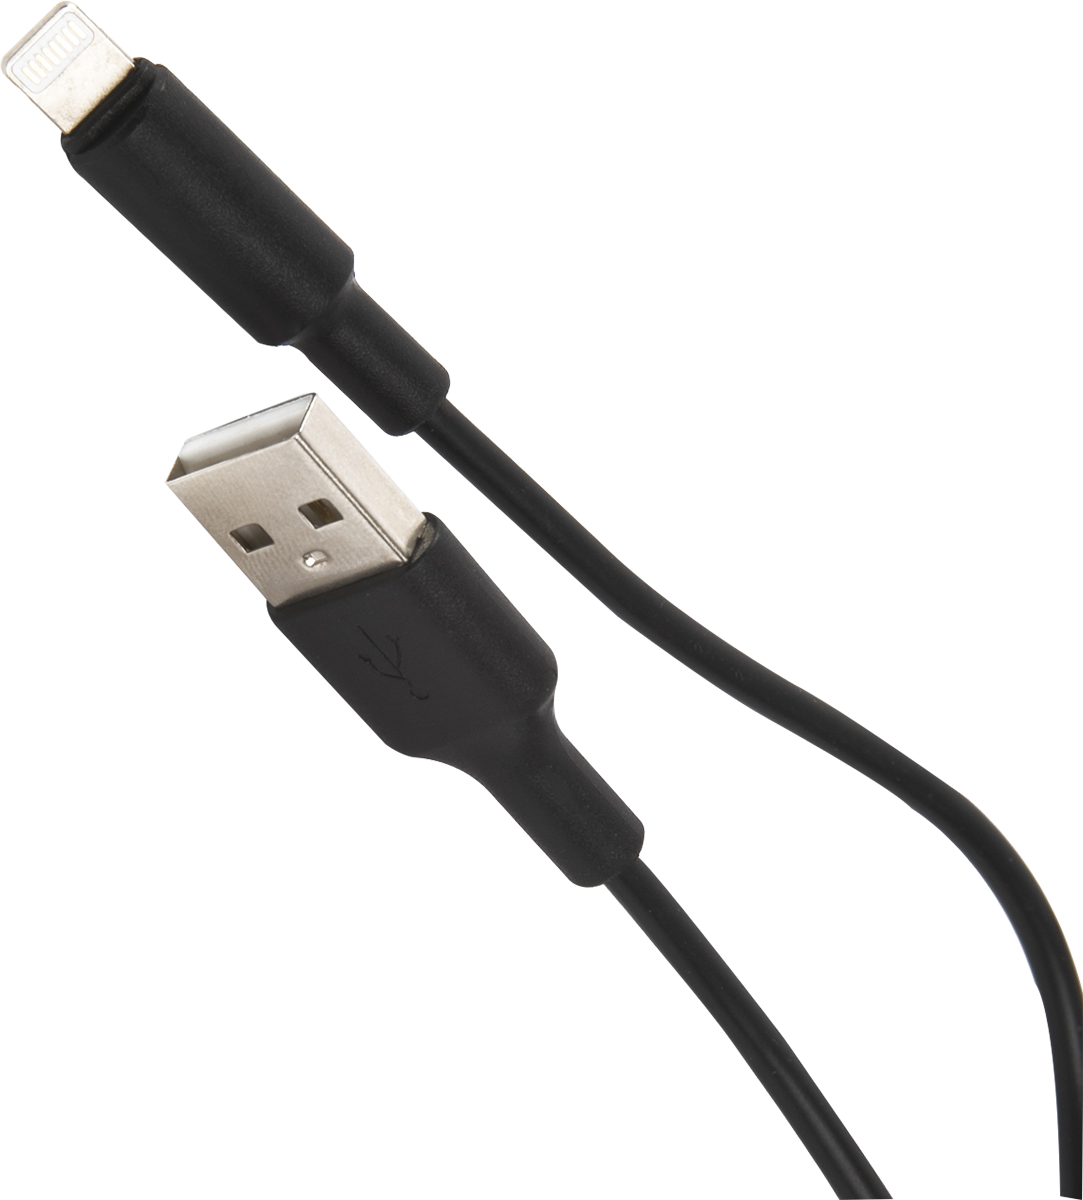 RA1 USB to Apple Lightning 1m Black